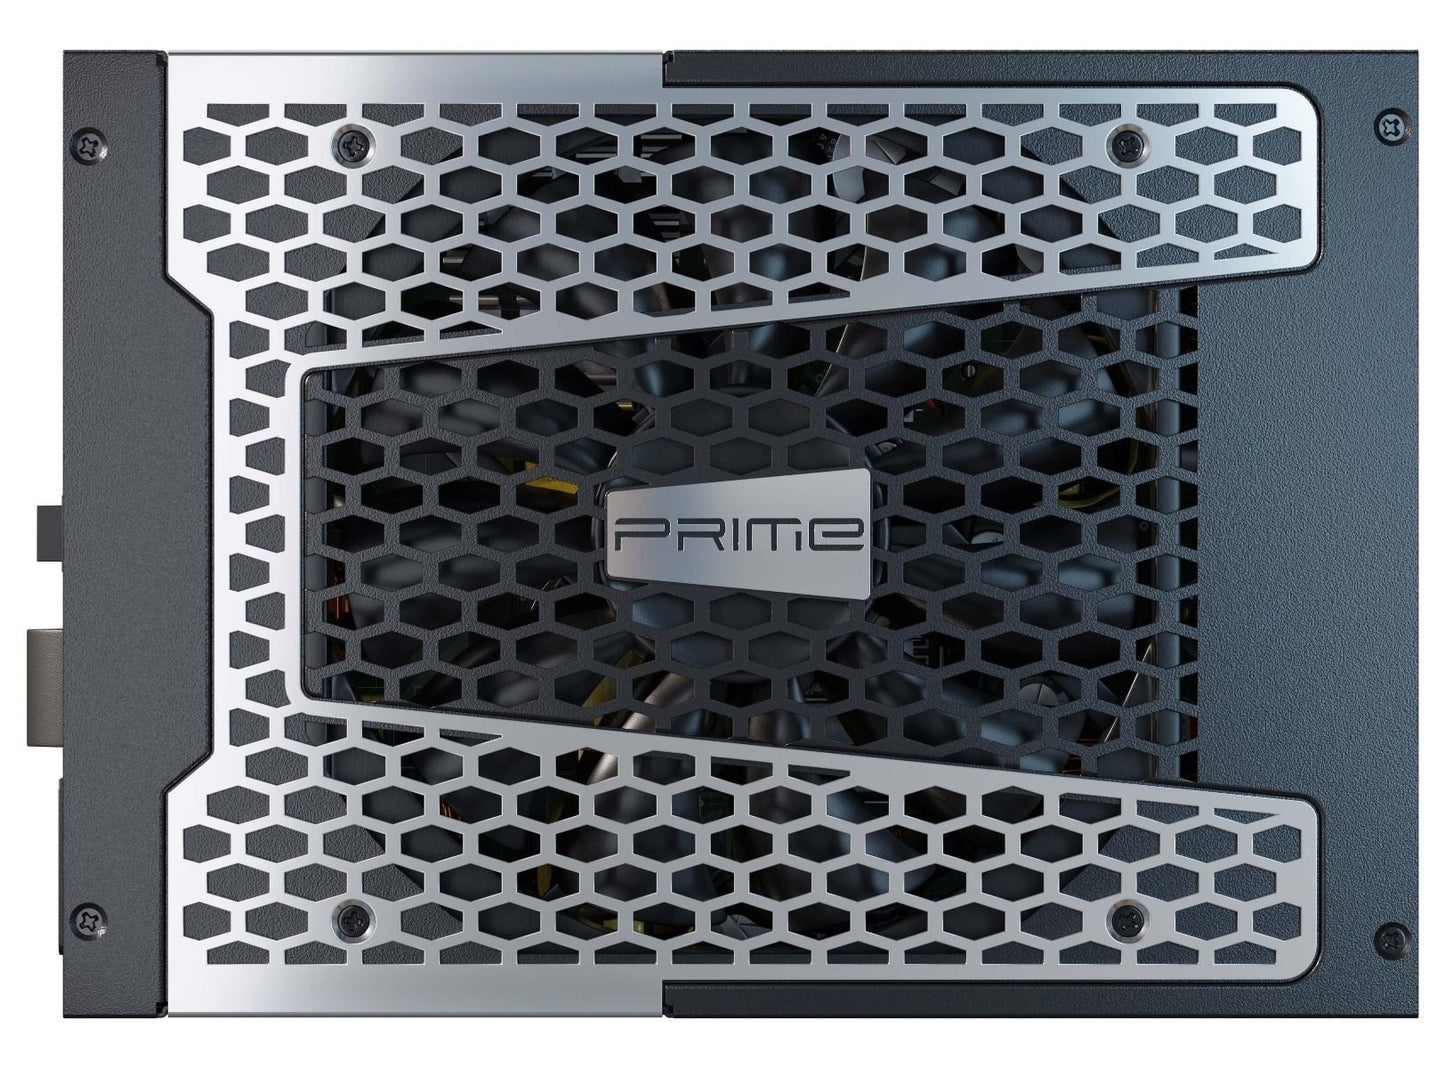 Seasonic PRIME PX-1600 1600W Platinum ATX 3.0 Fully Modular PSU